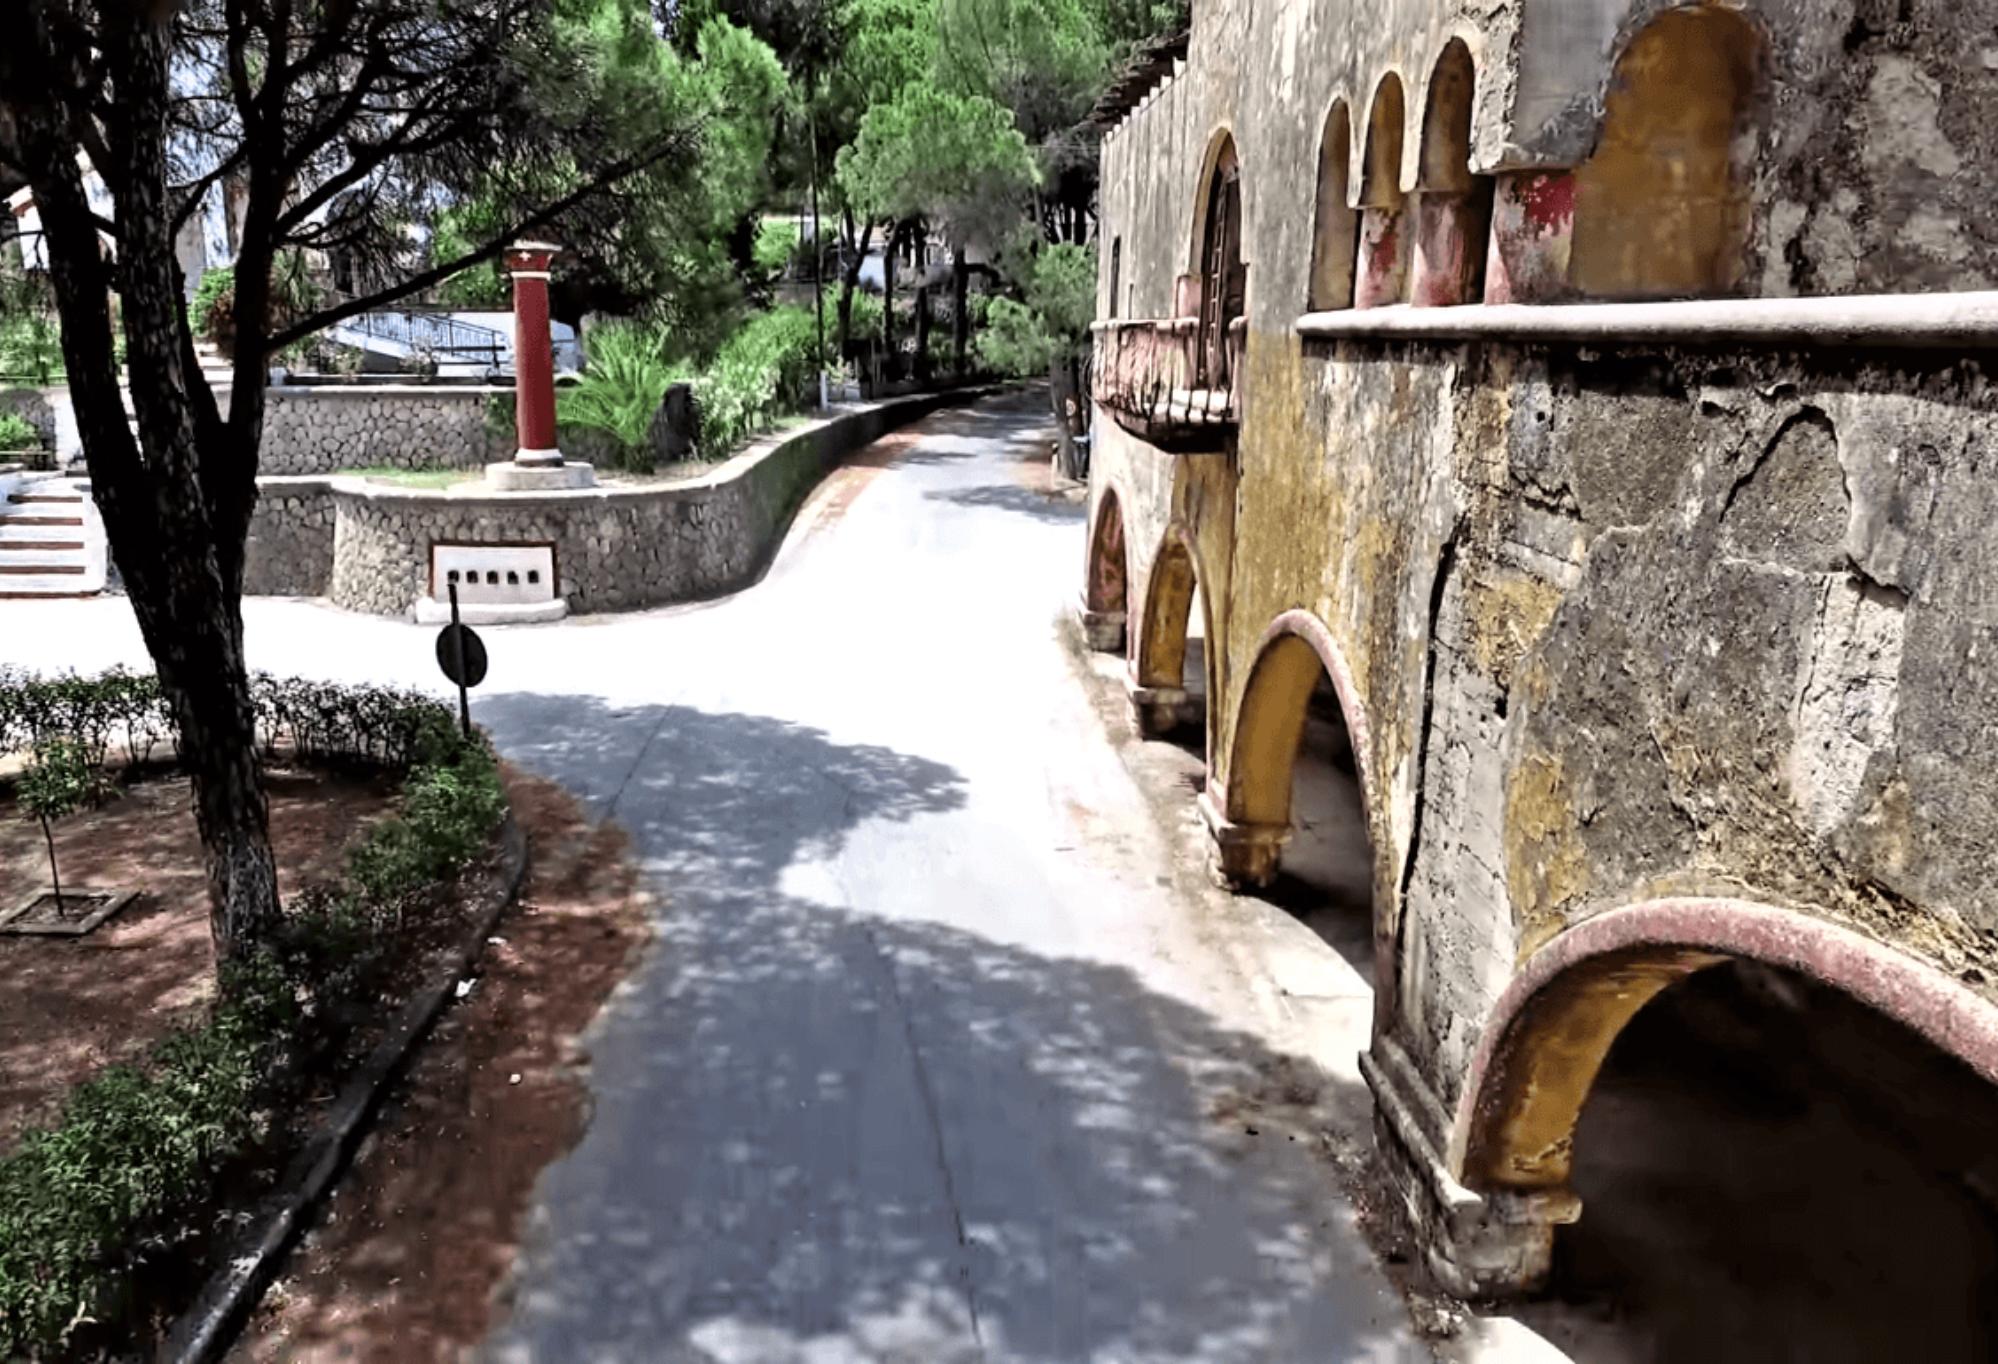 Campochiaro: Το Ελληνικό χωριό φάντασμα που μυρίζει θάνατο δεν πλησίαζε κανείς και ο χρόνος μοιάζει να σταμάτησε για πάντα